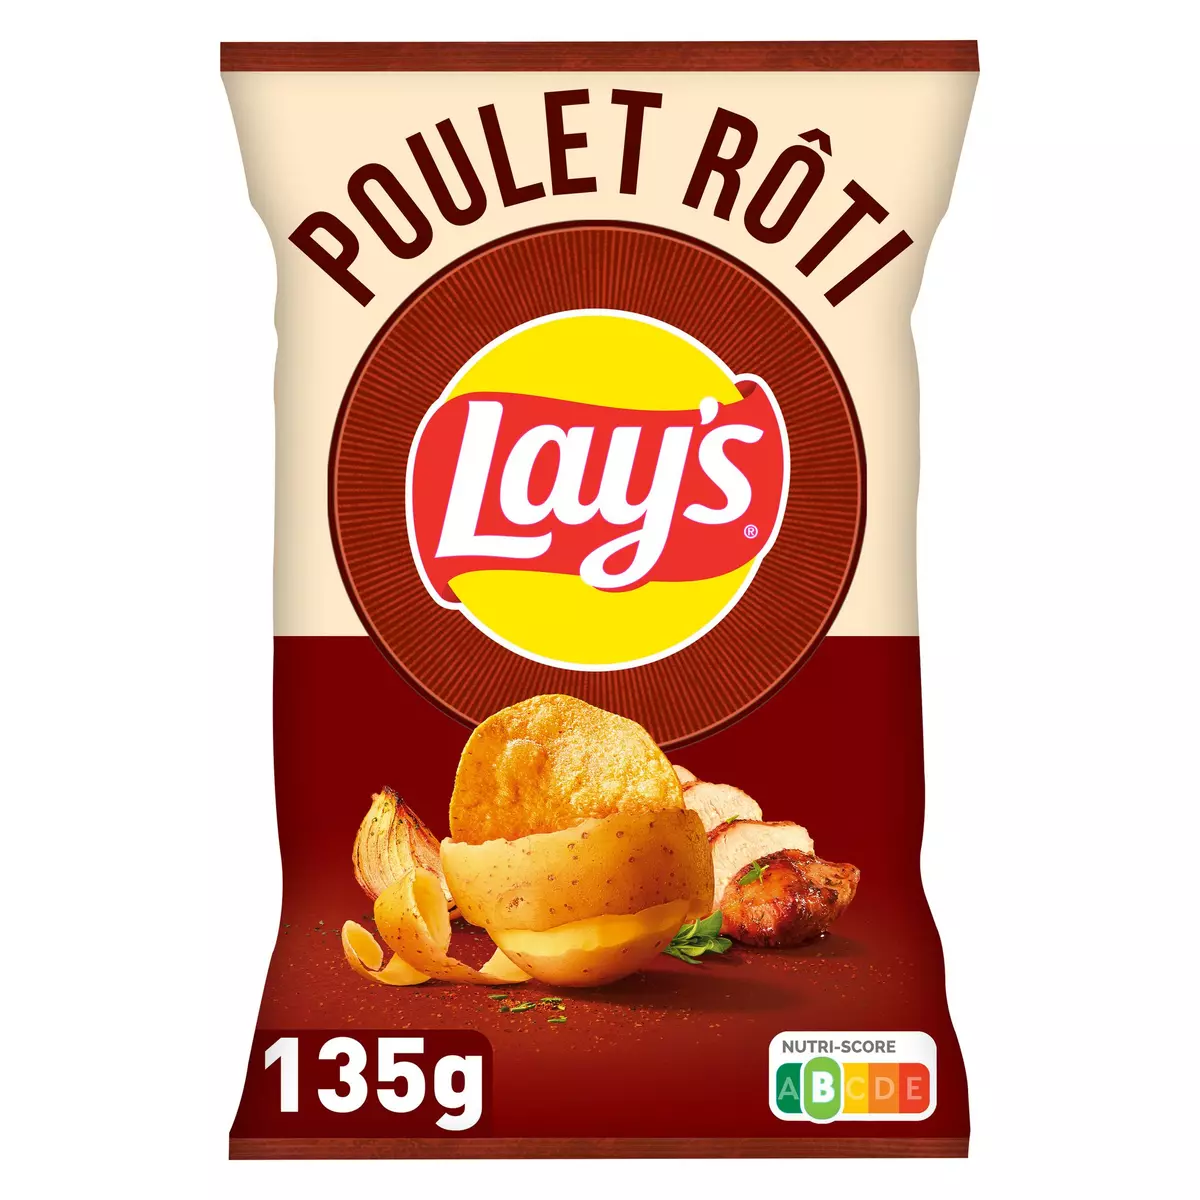 LAY'S Chips poulet rôti 135g